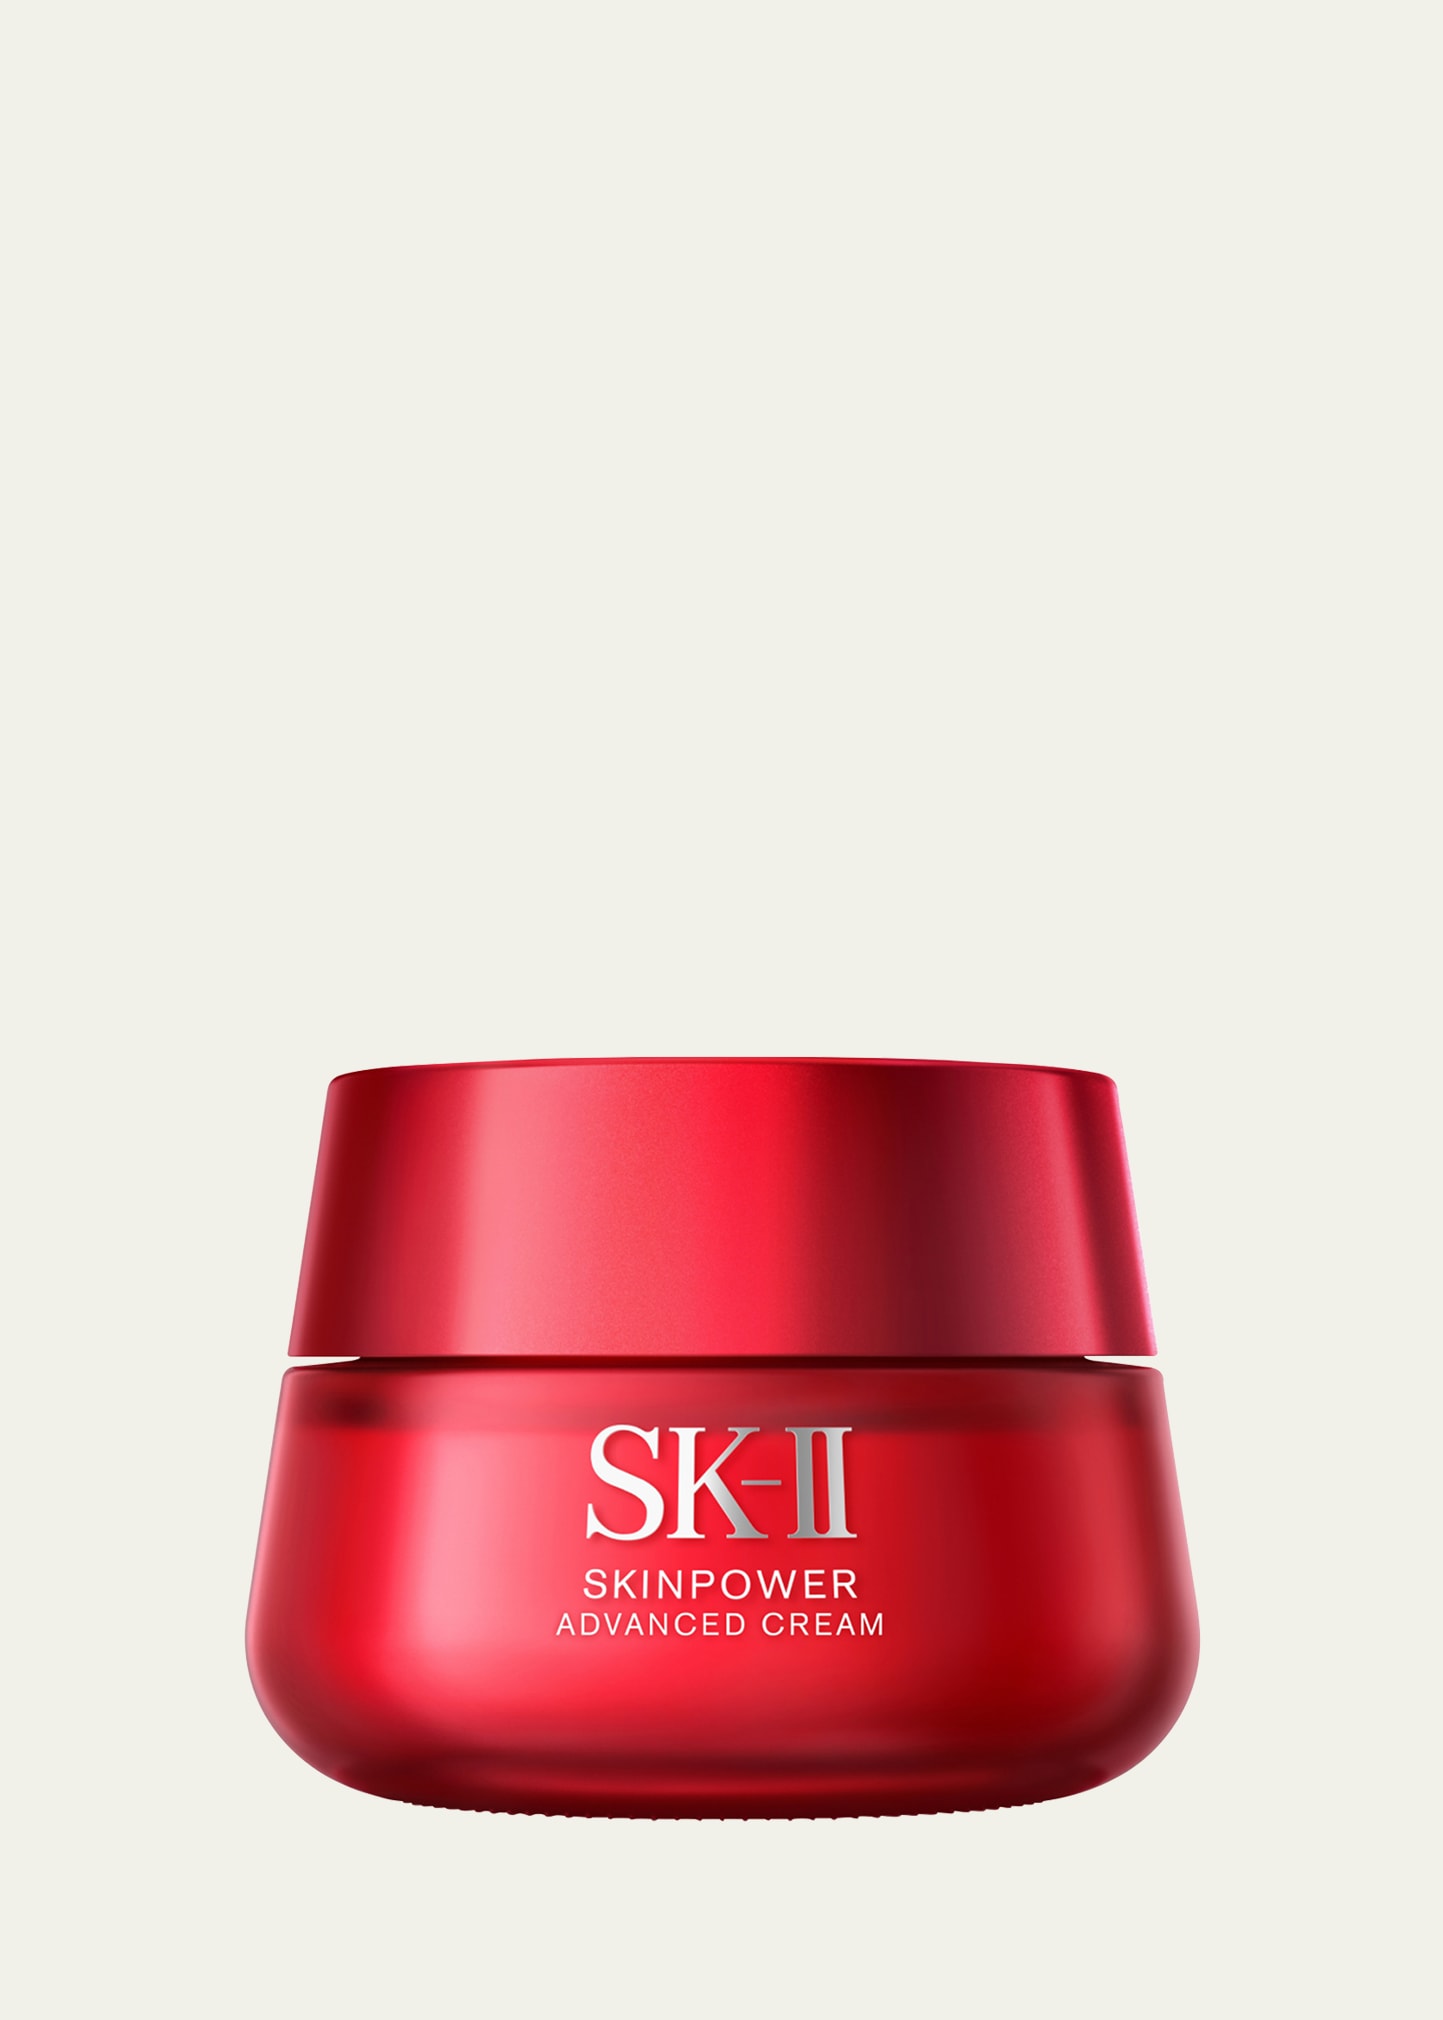 Skinpower Advanced Cream, 2.7 oz.